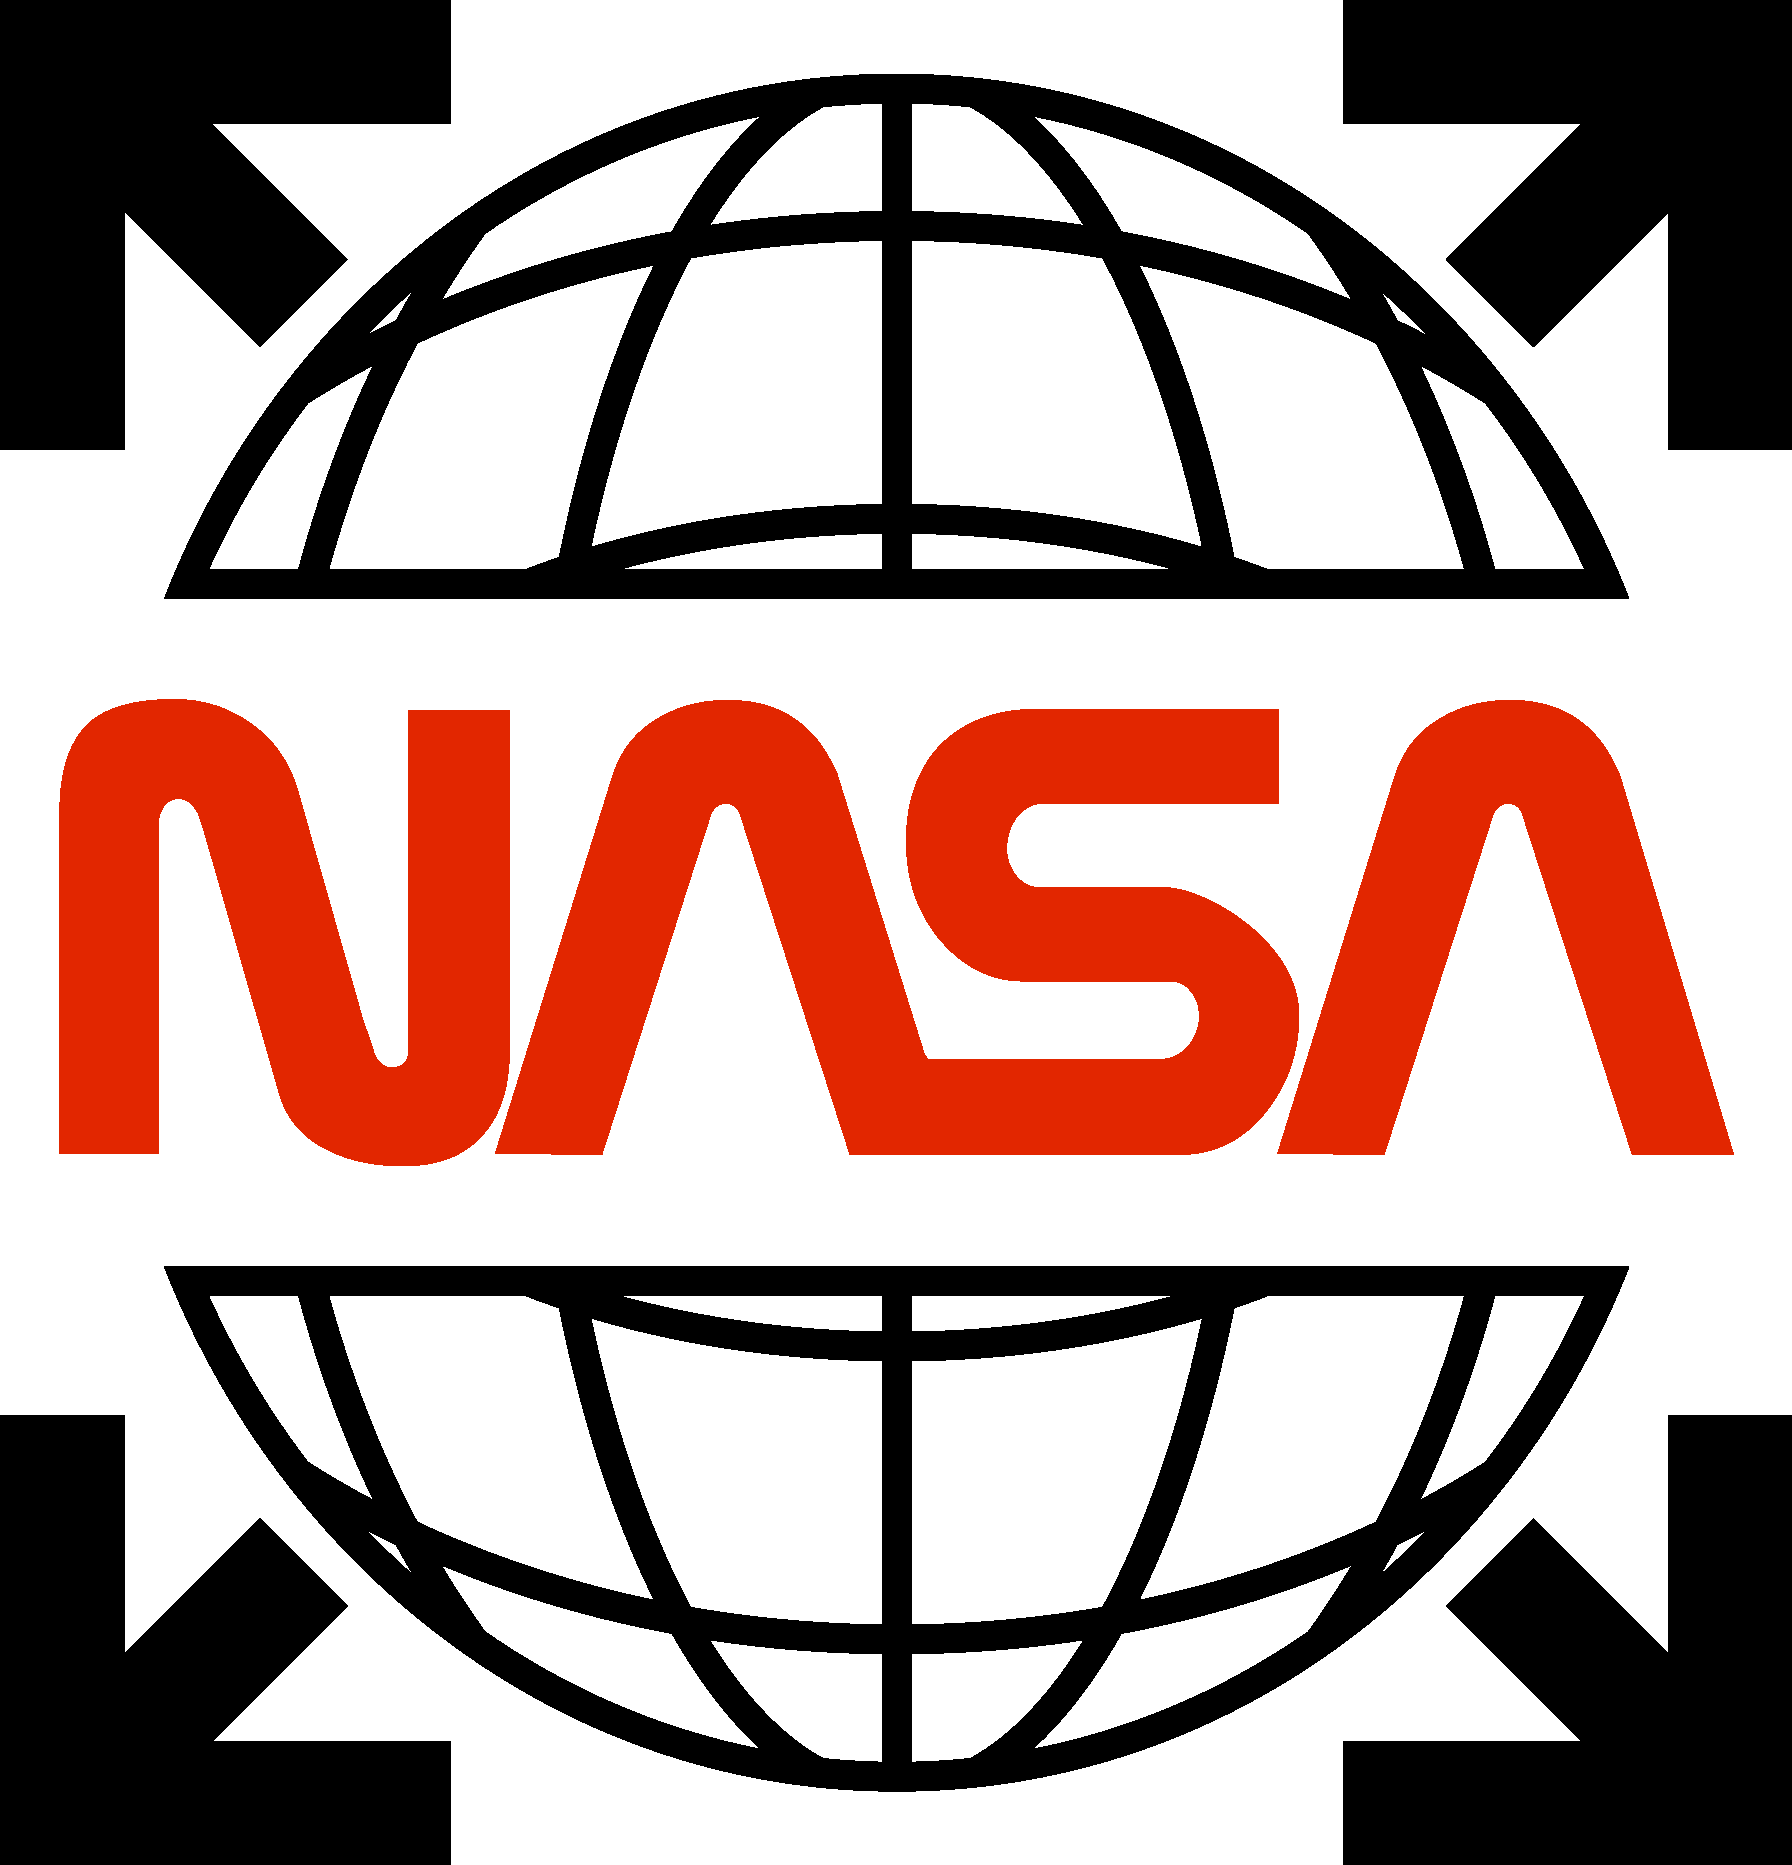 NASA Logo PNG Transparent Images - PNG All